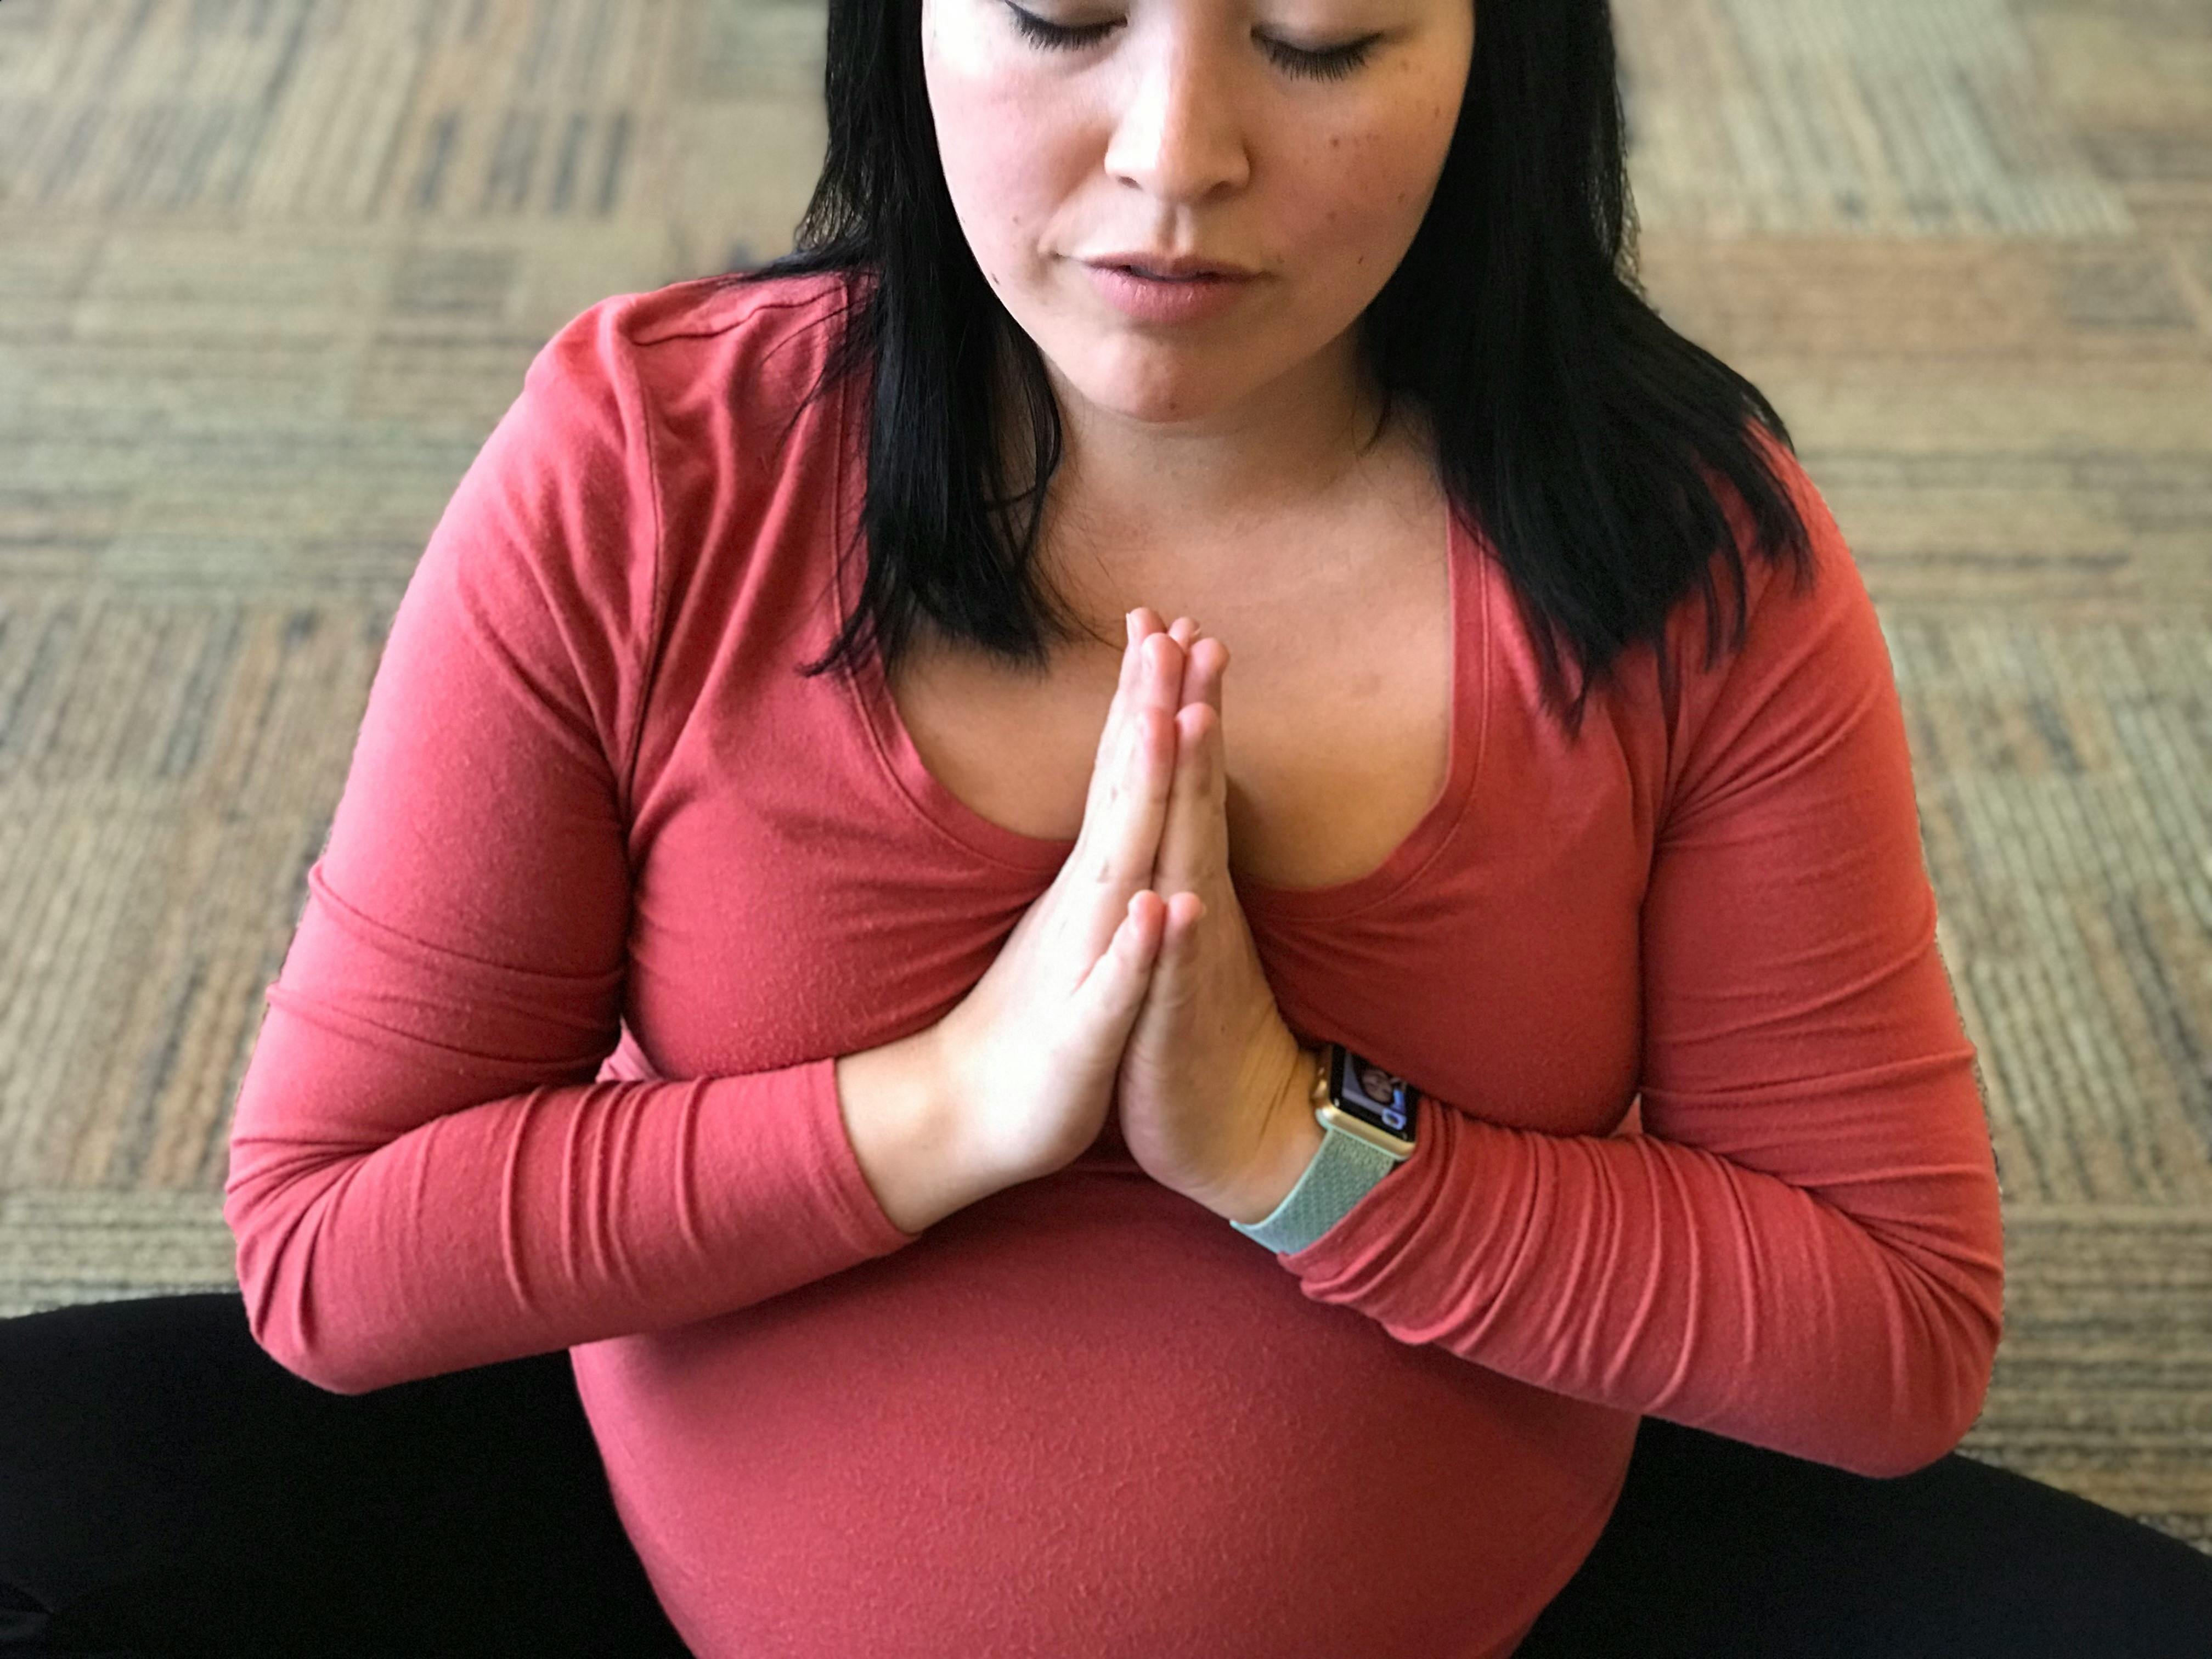 woman hands in prayer eyes closed meditating